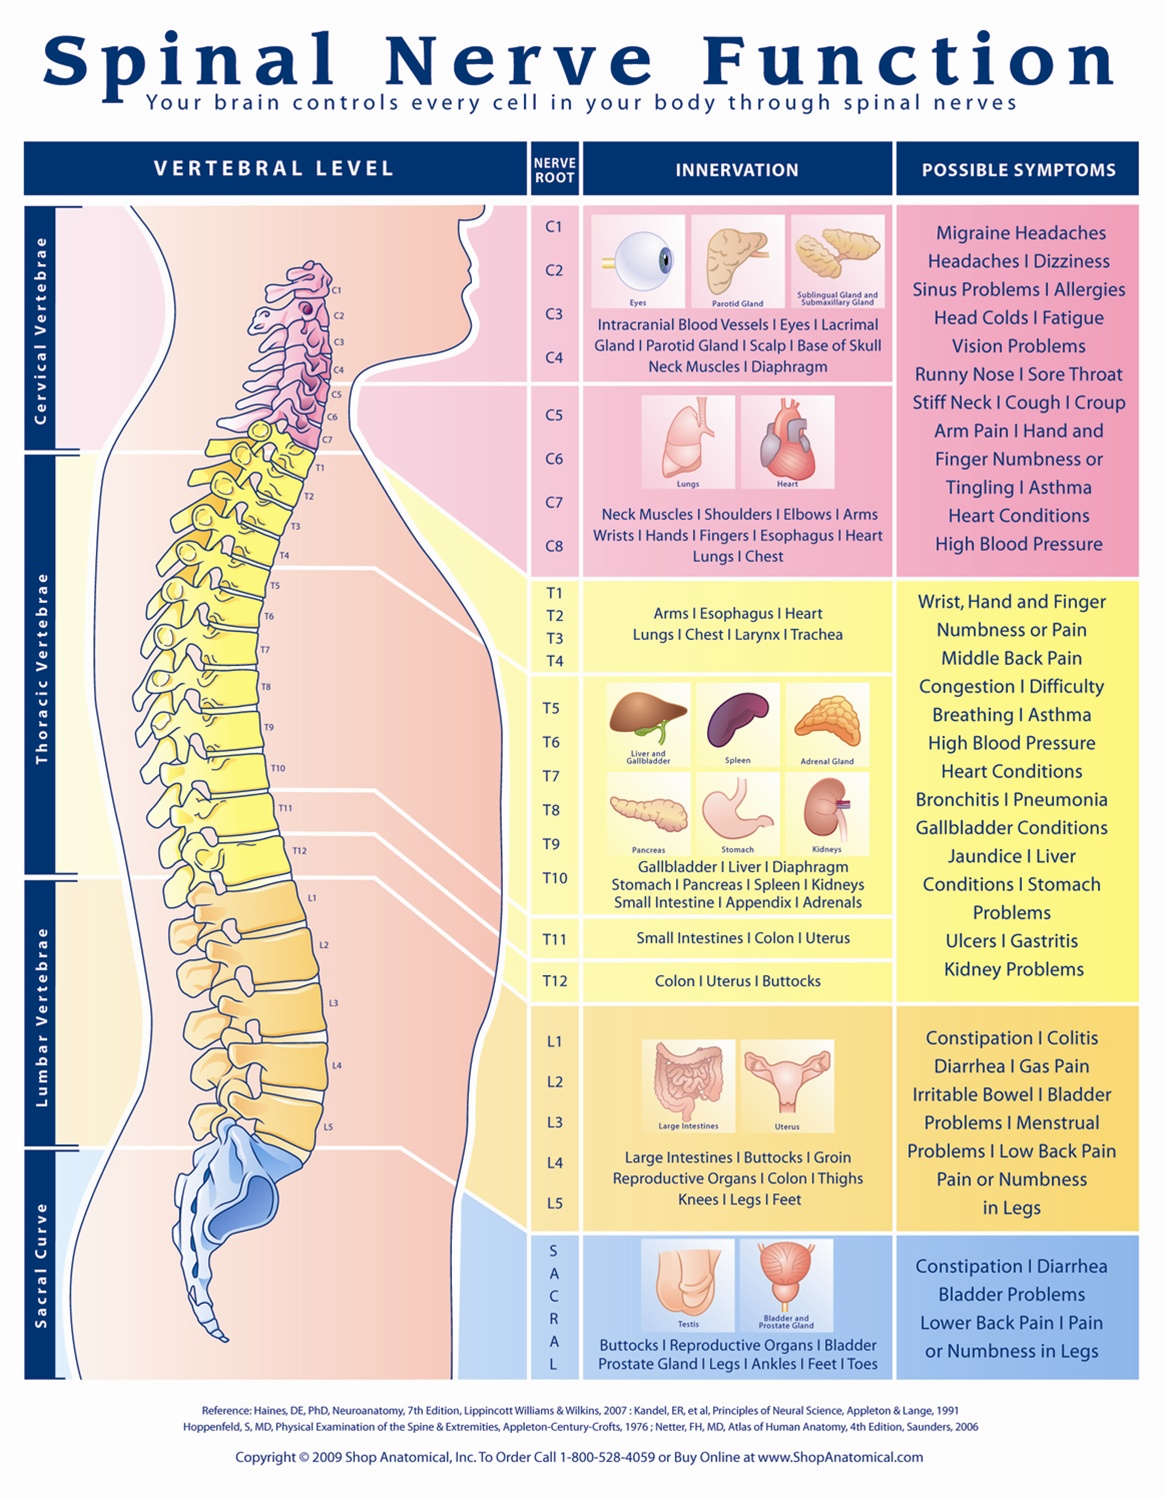 Spinal-Nerve-Functionjpg-Page1-1.jpg